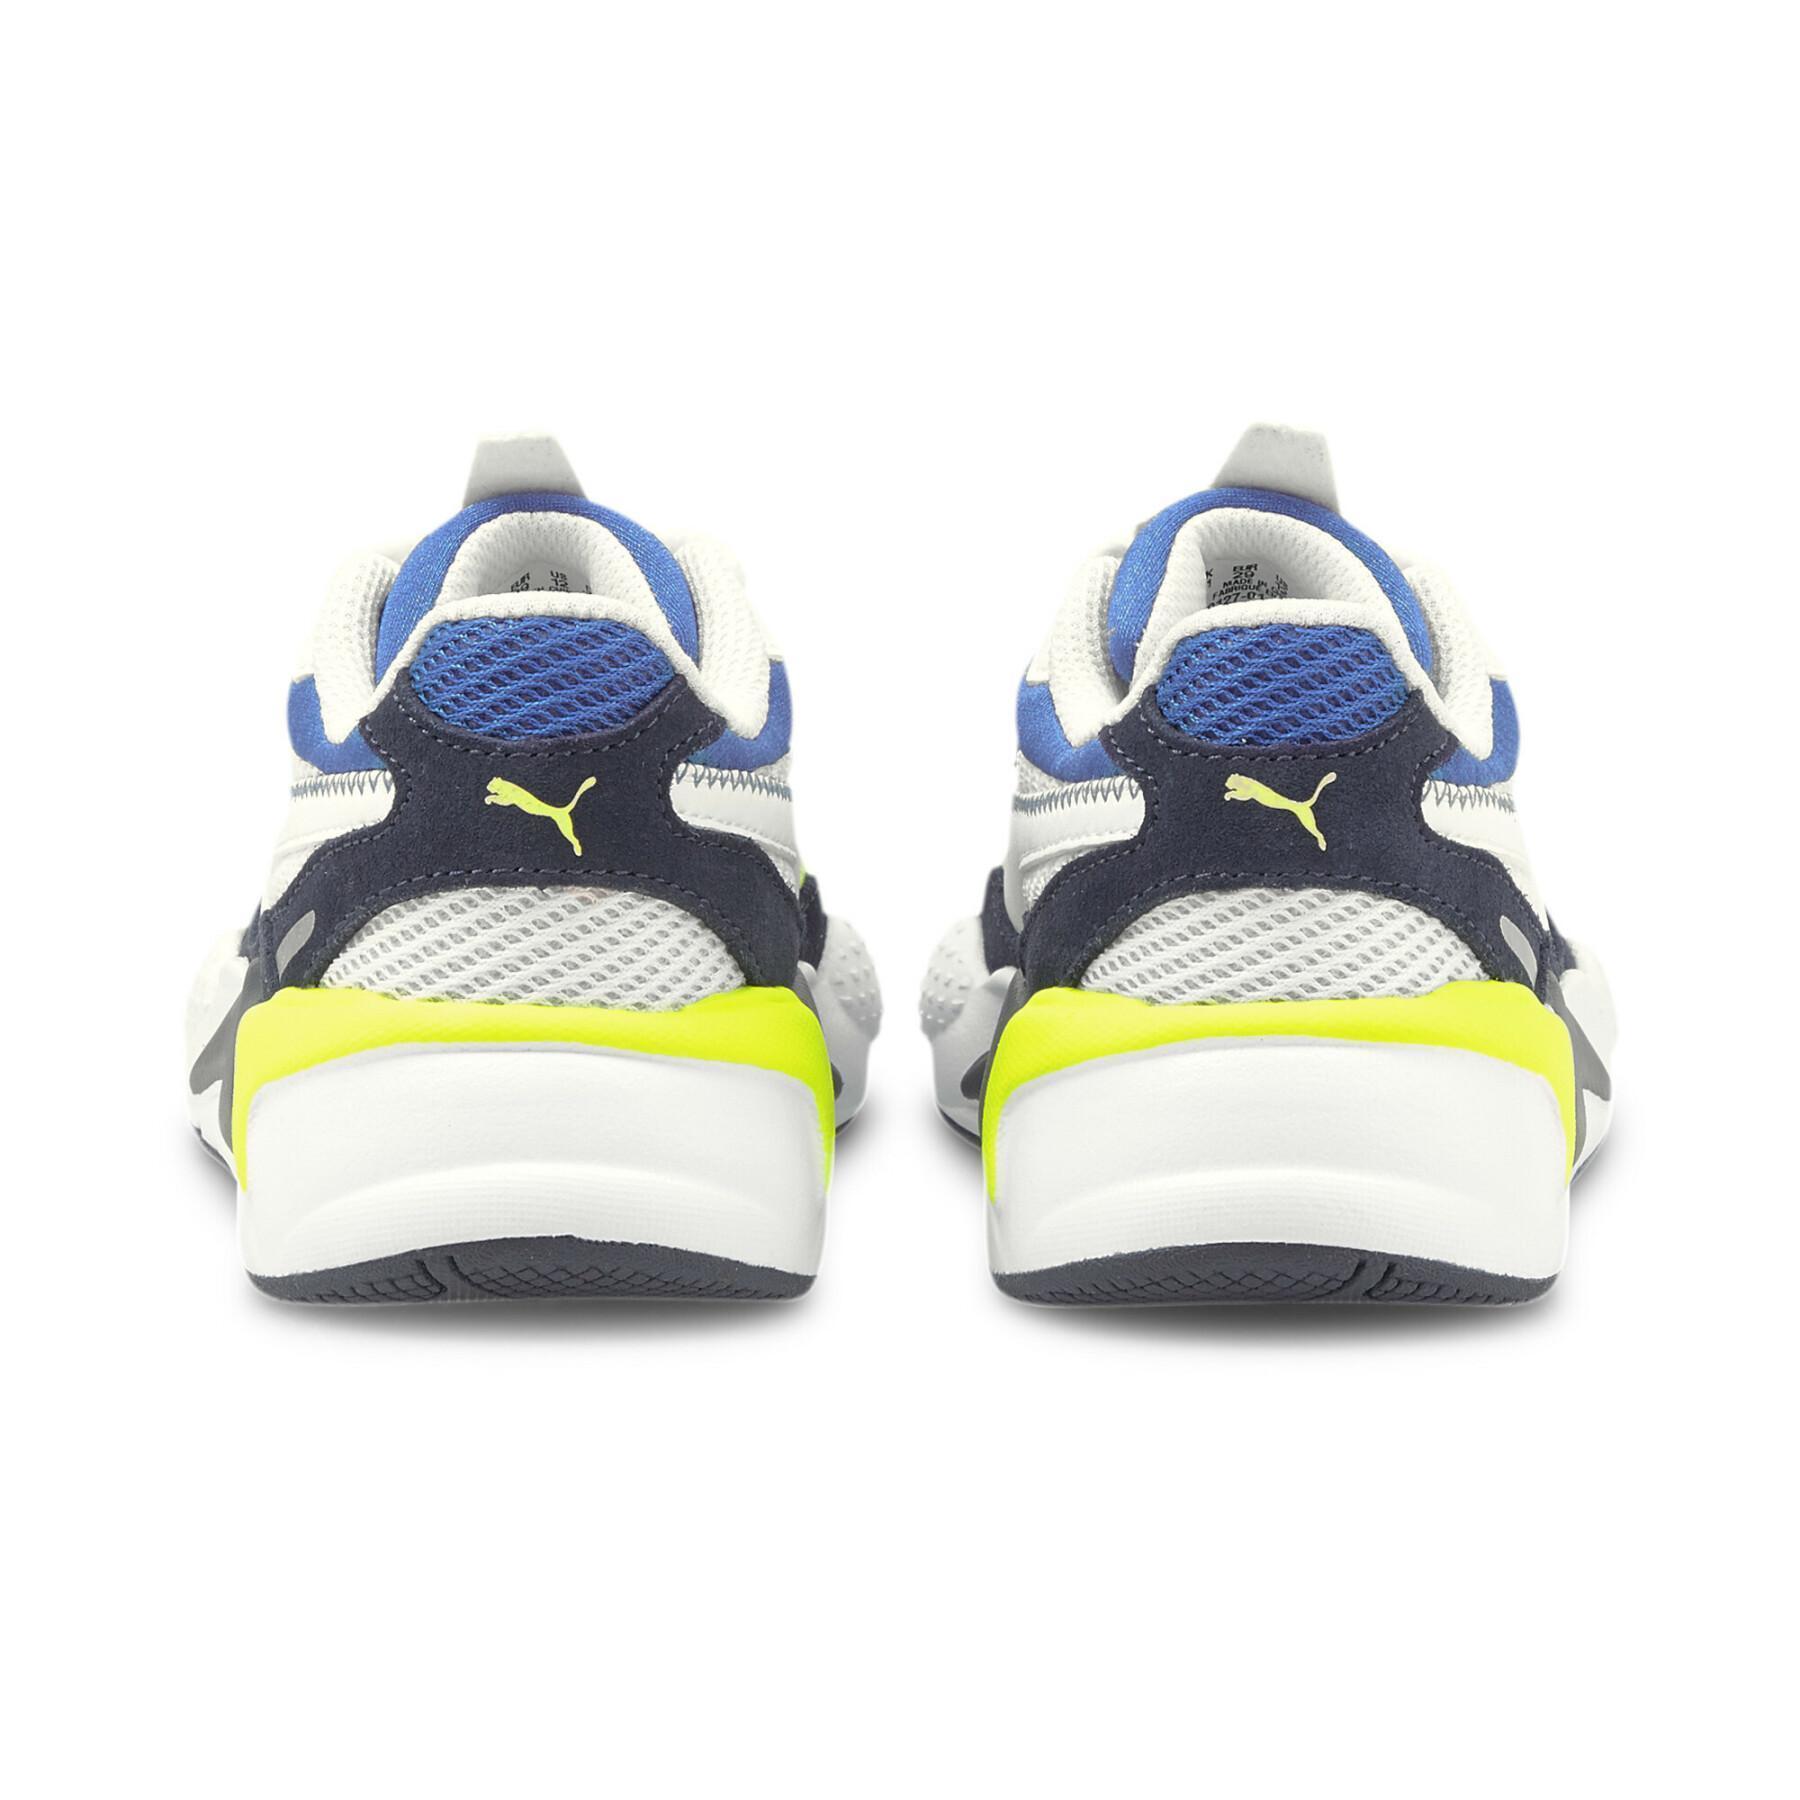 Children's sneakers Puma RS-X³ Twill AirMesh